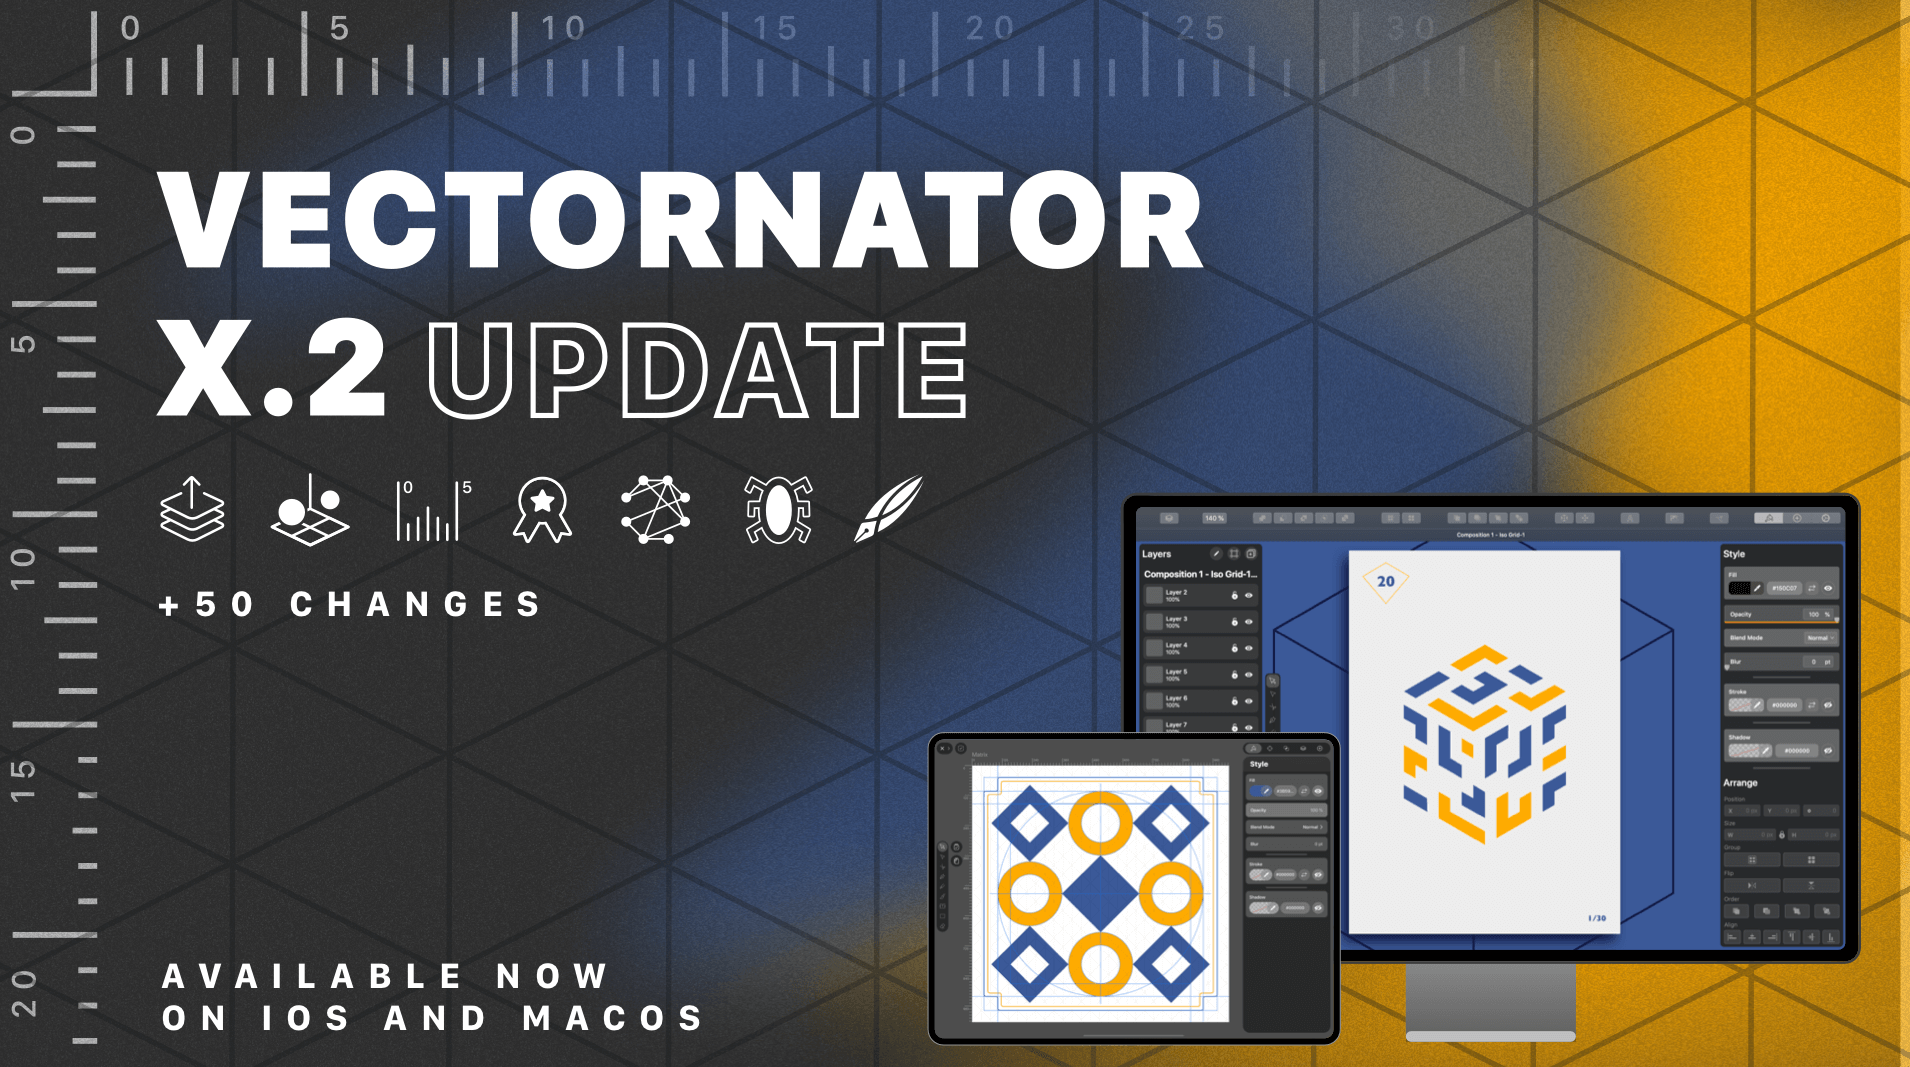 Vectornator X.2 update | Linearity